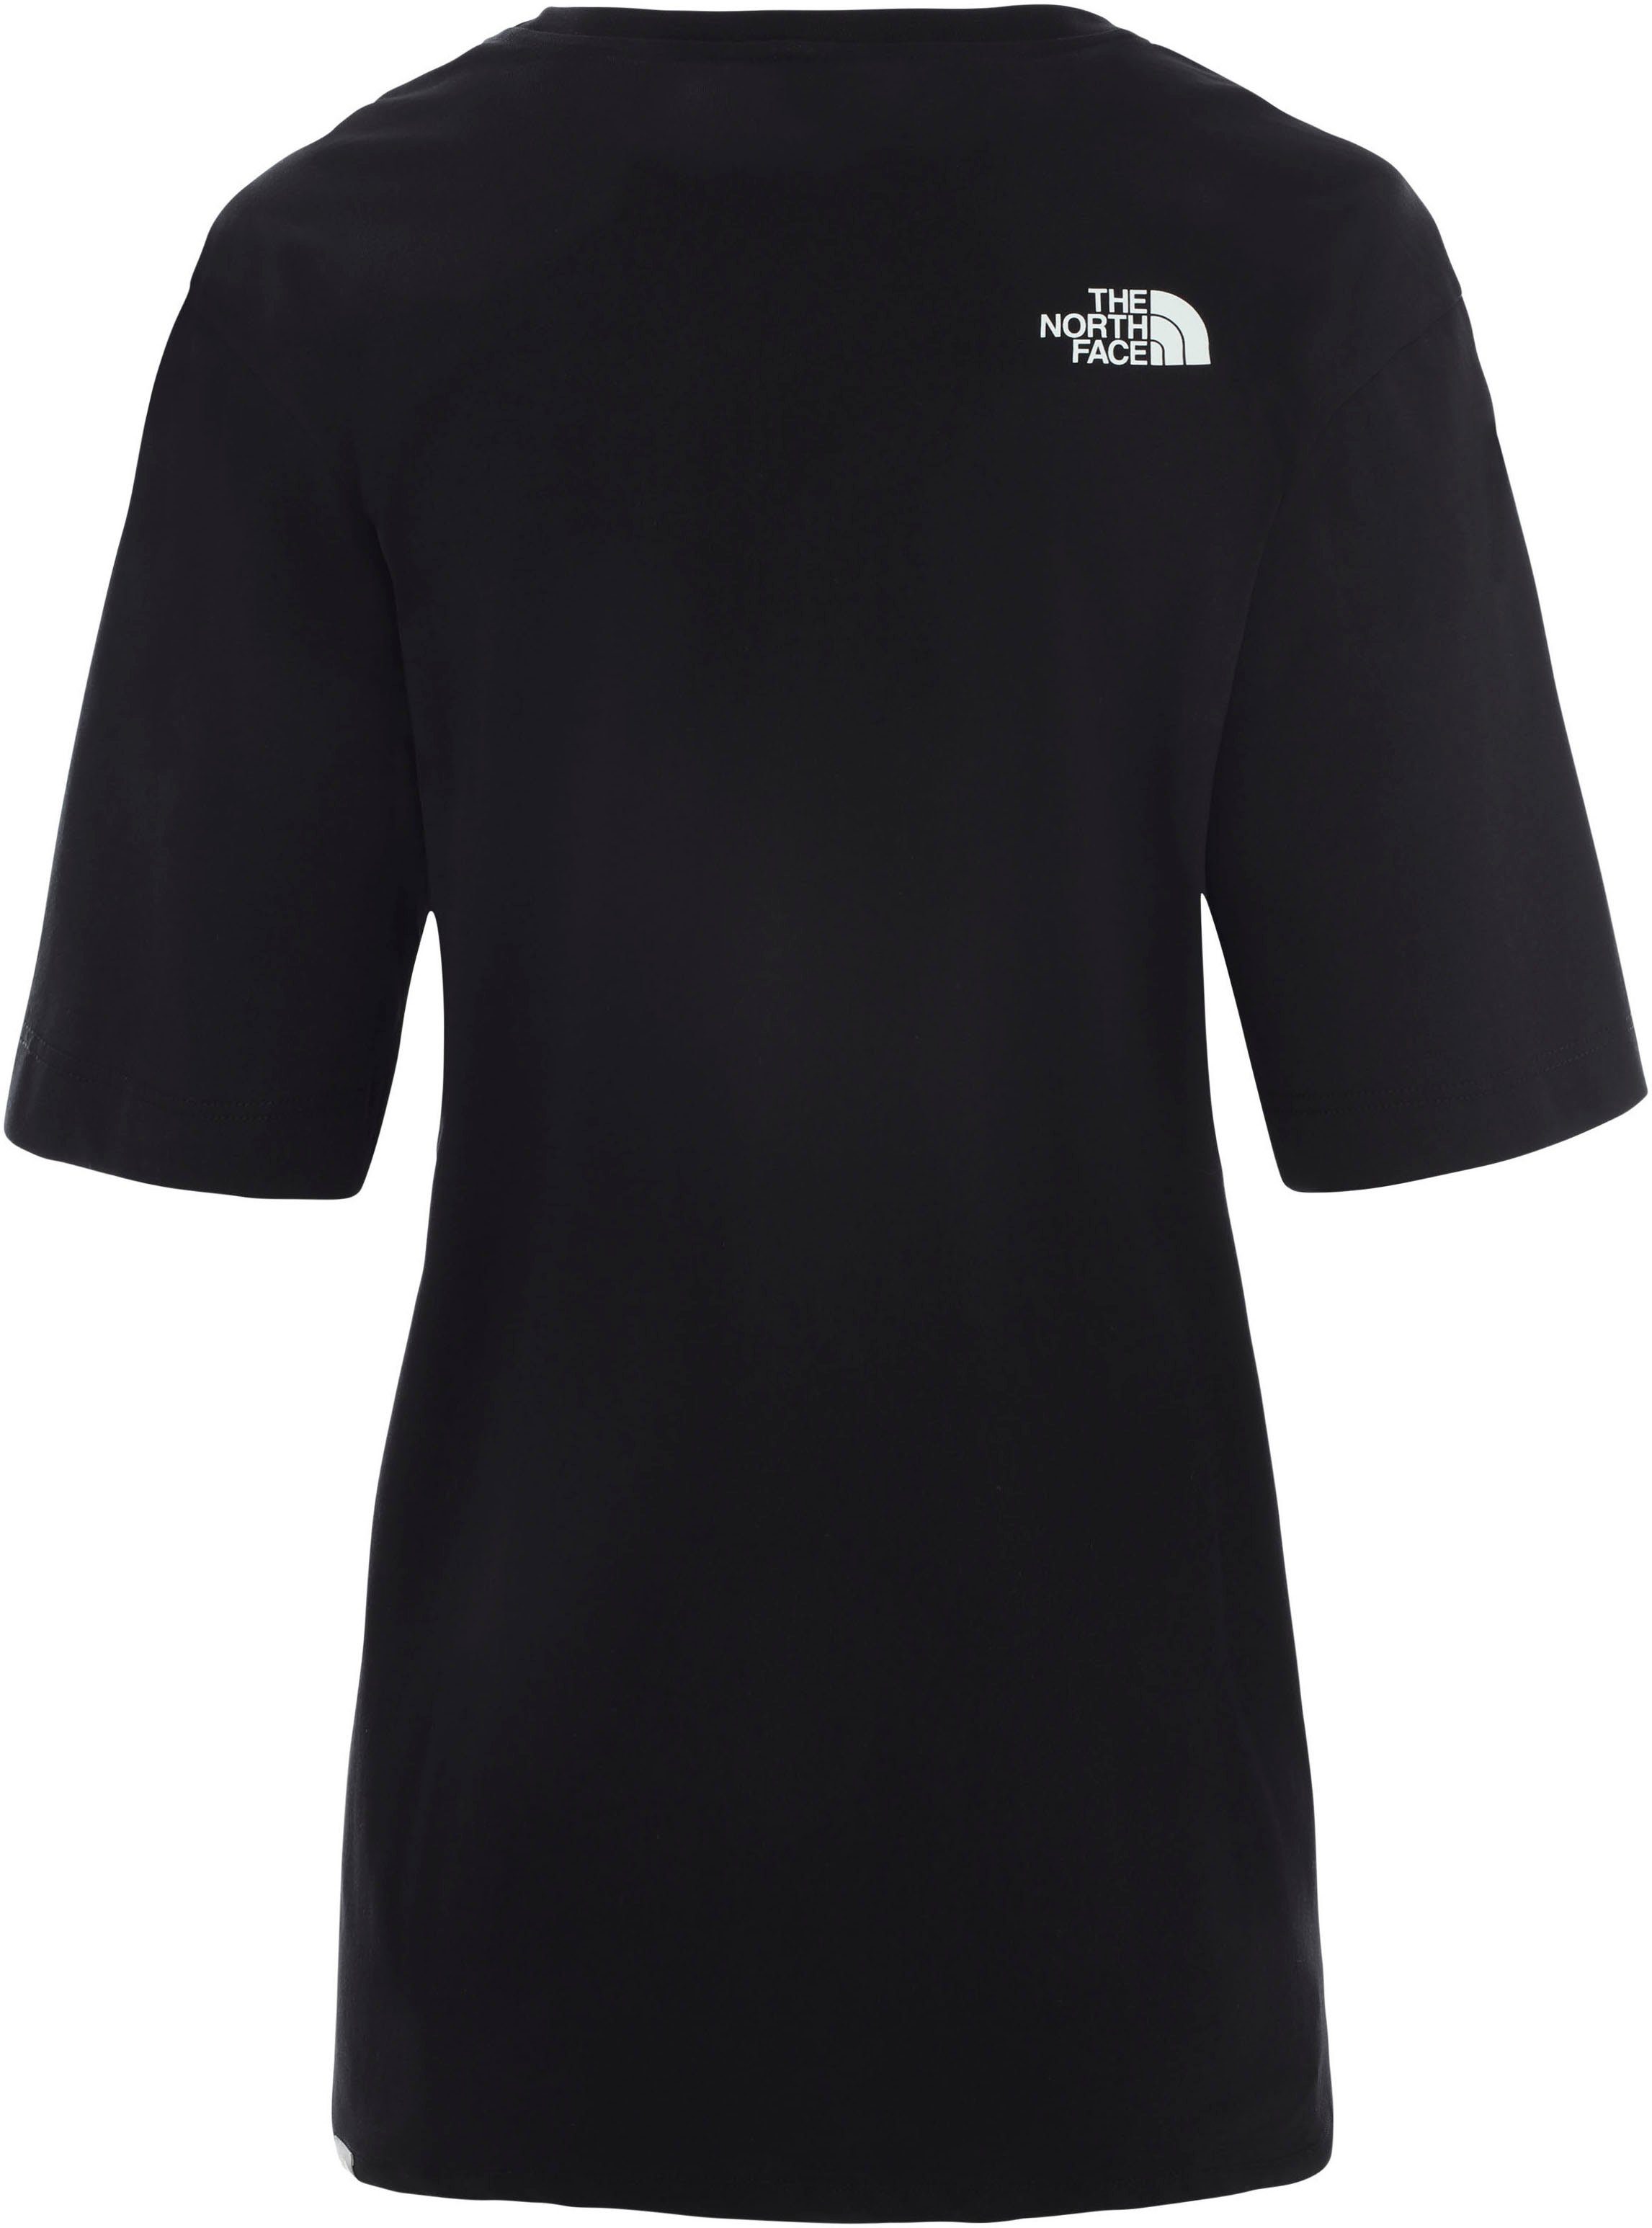 The North Face T-Shirt W mit der EASY black RELAXED TEE Brust Logodruck auf